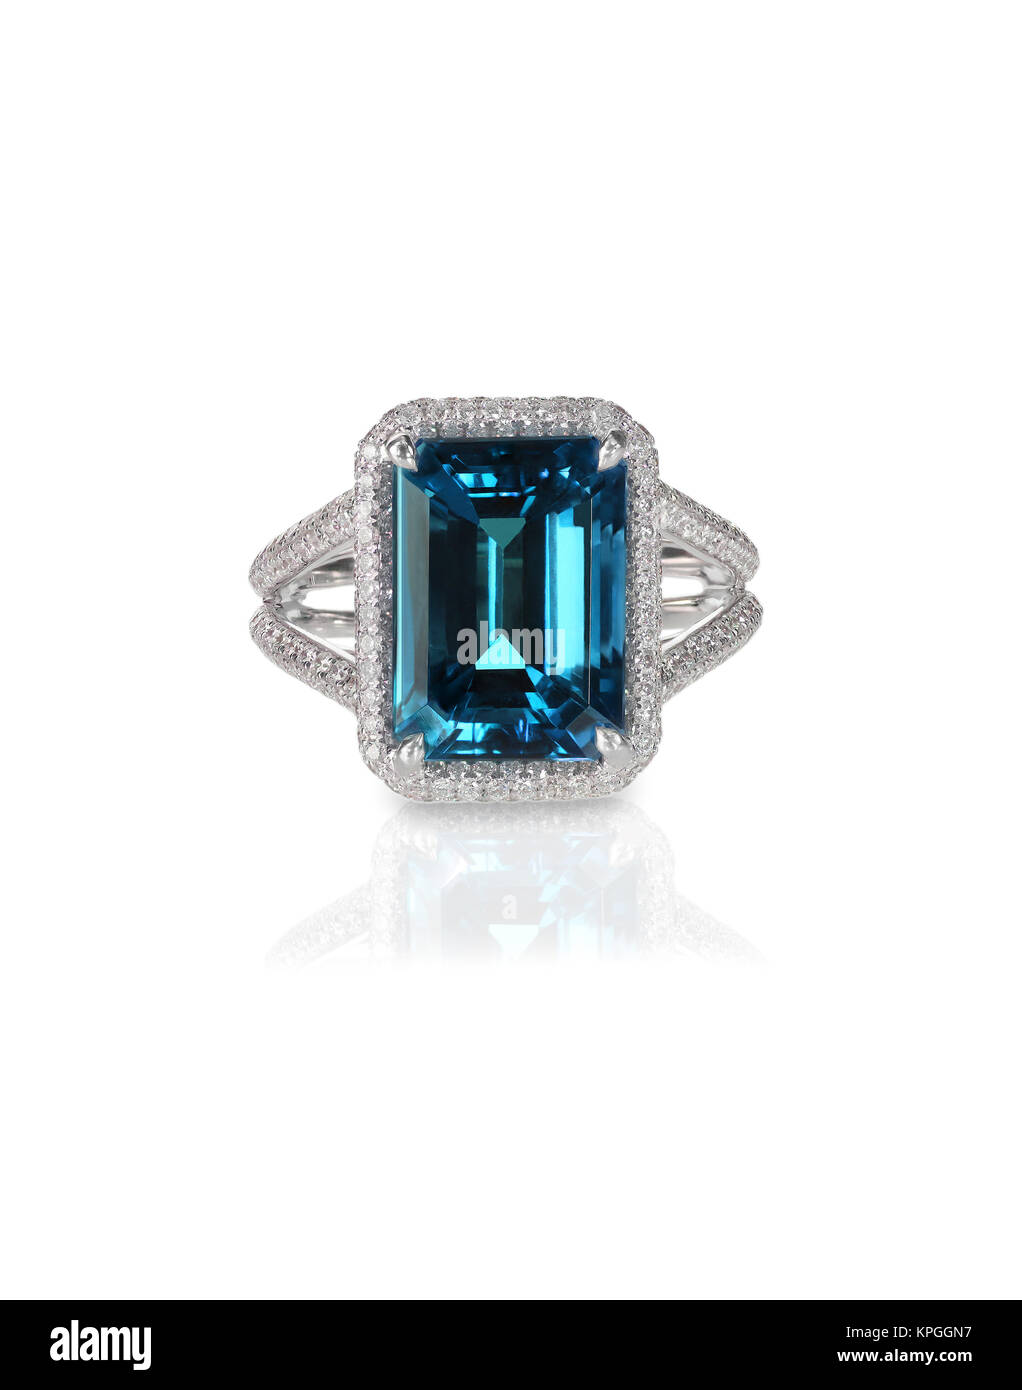 aquamarine center stone ring with diamond halo Stock Photo